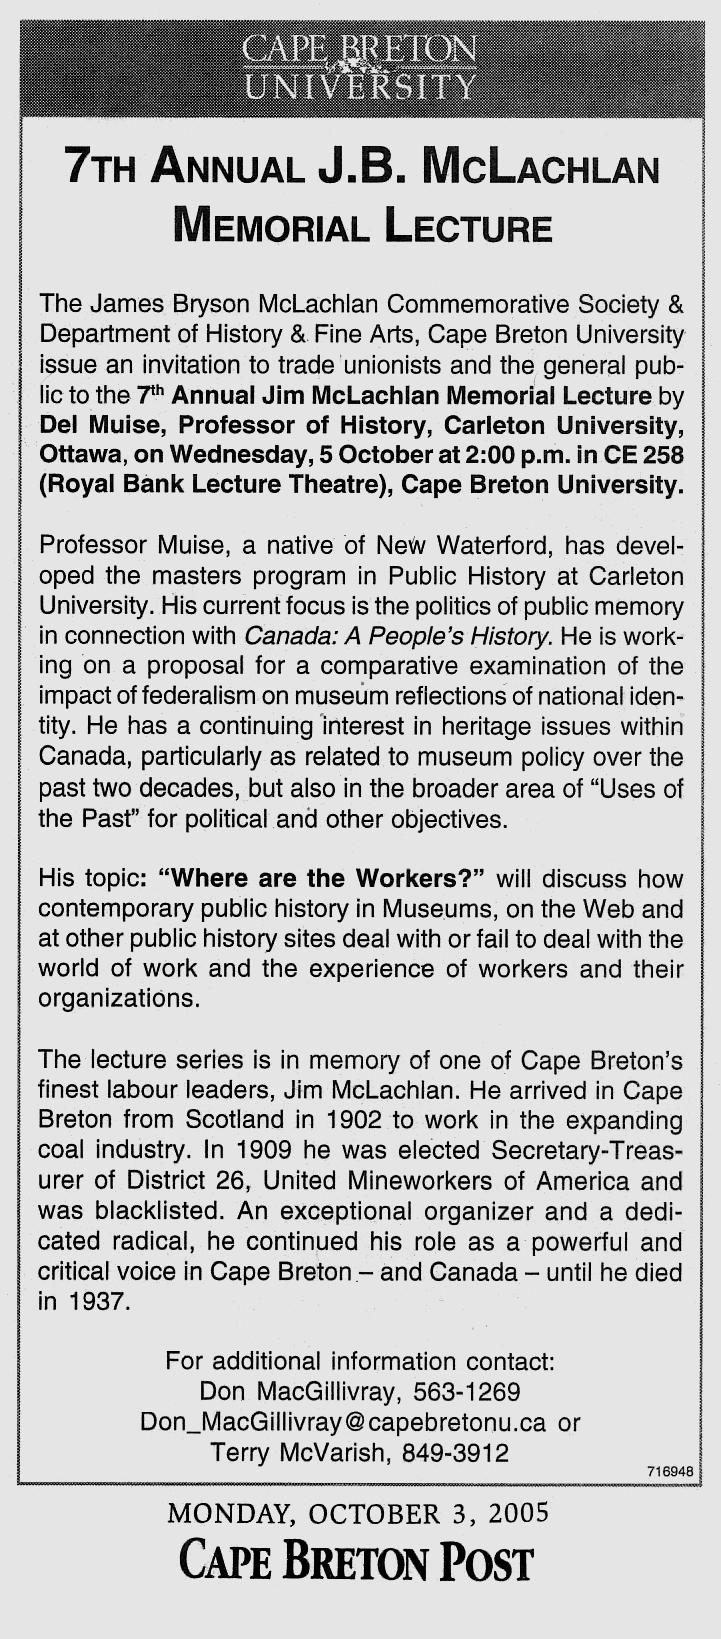 J.B. McLachlan Memorial Lecture, Cape Breton University